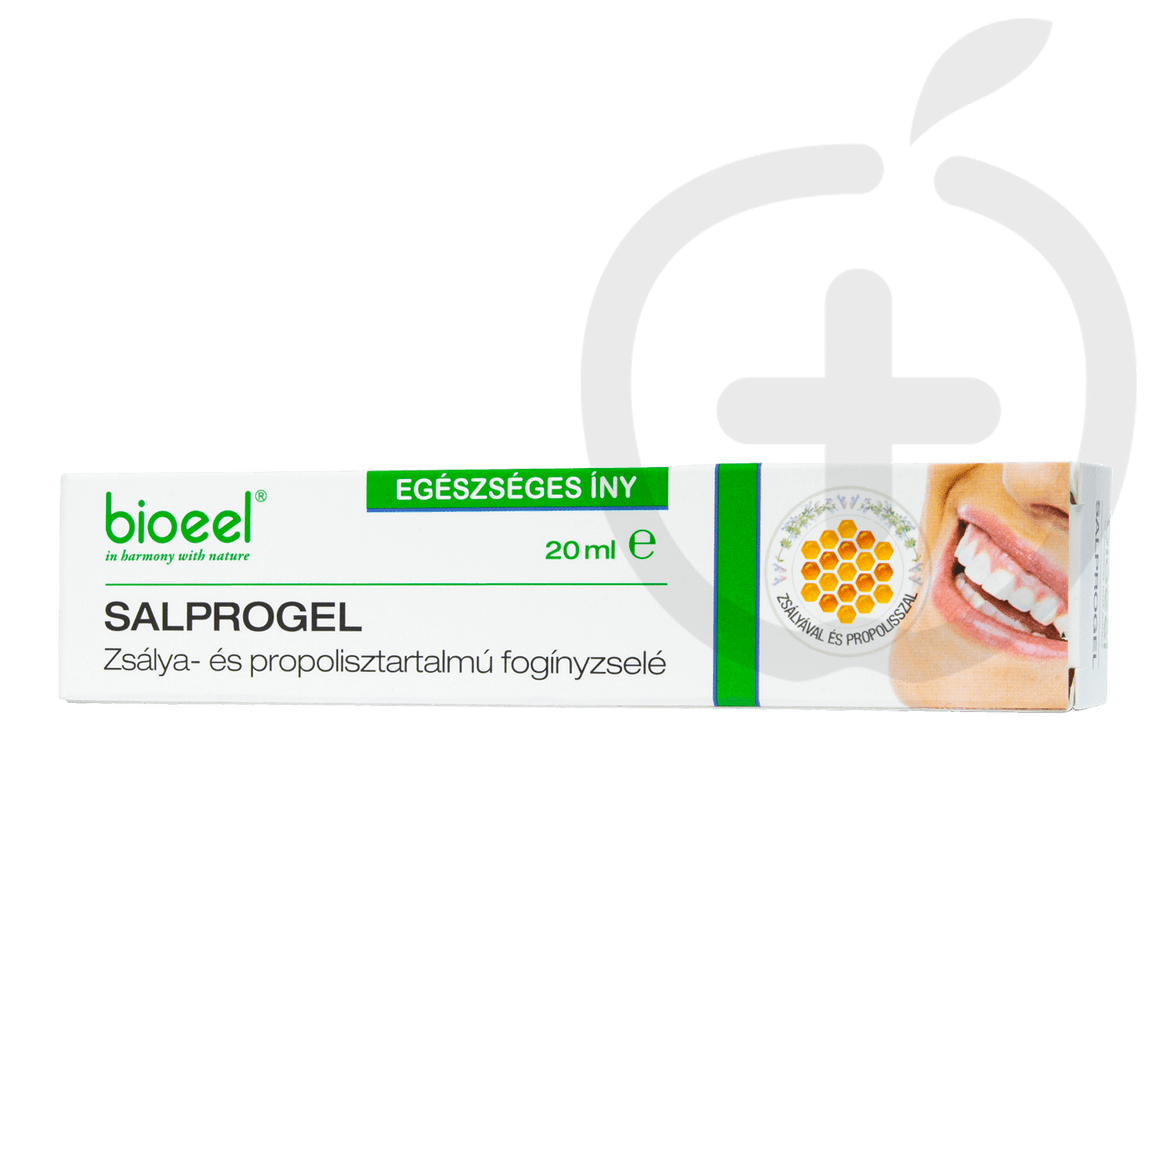 Bioeel salprogel Salprogel fogínyzselé 20 ml